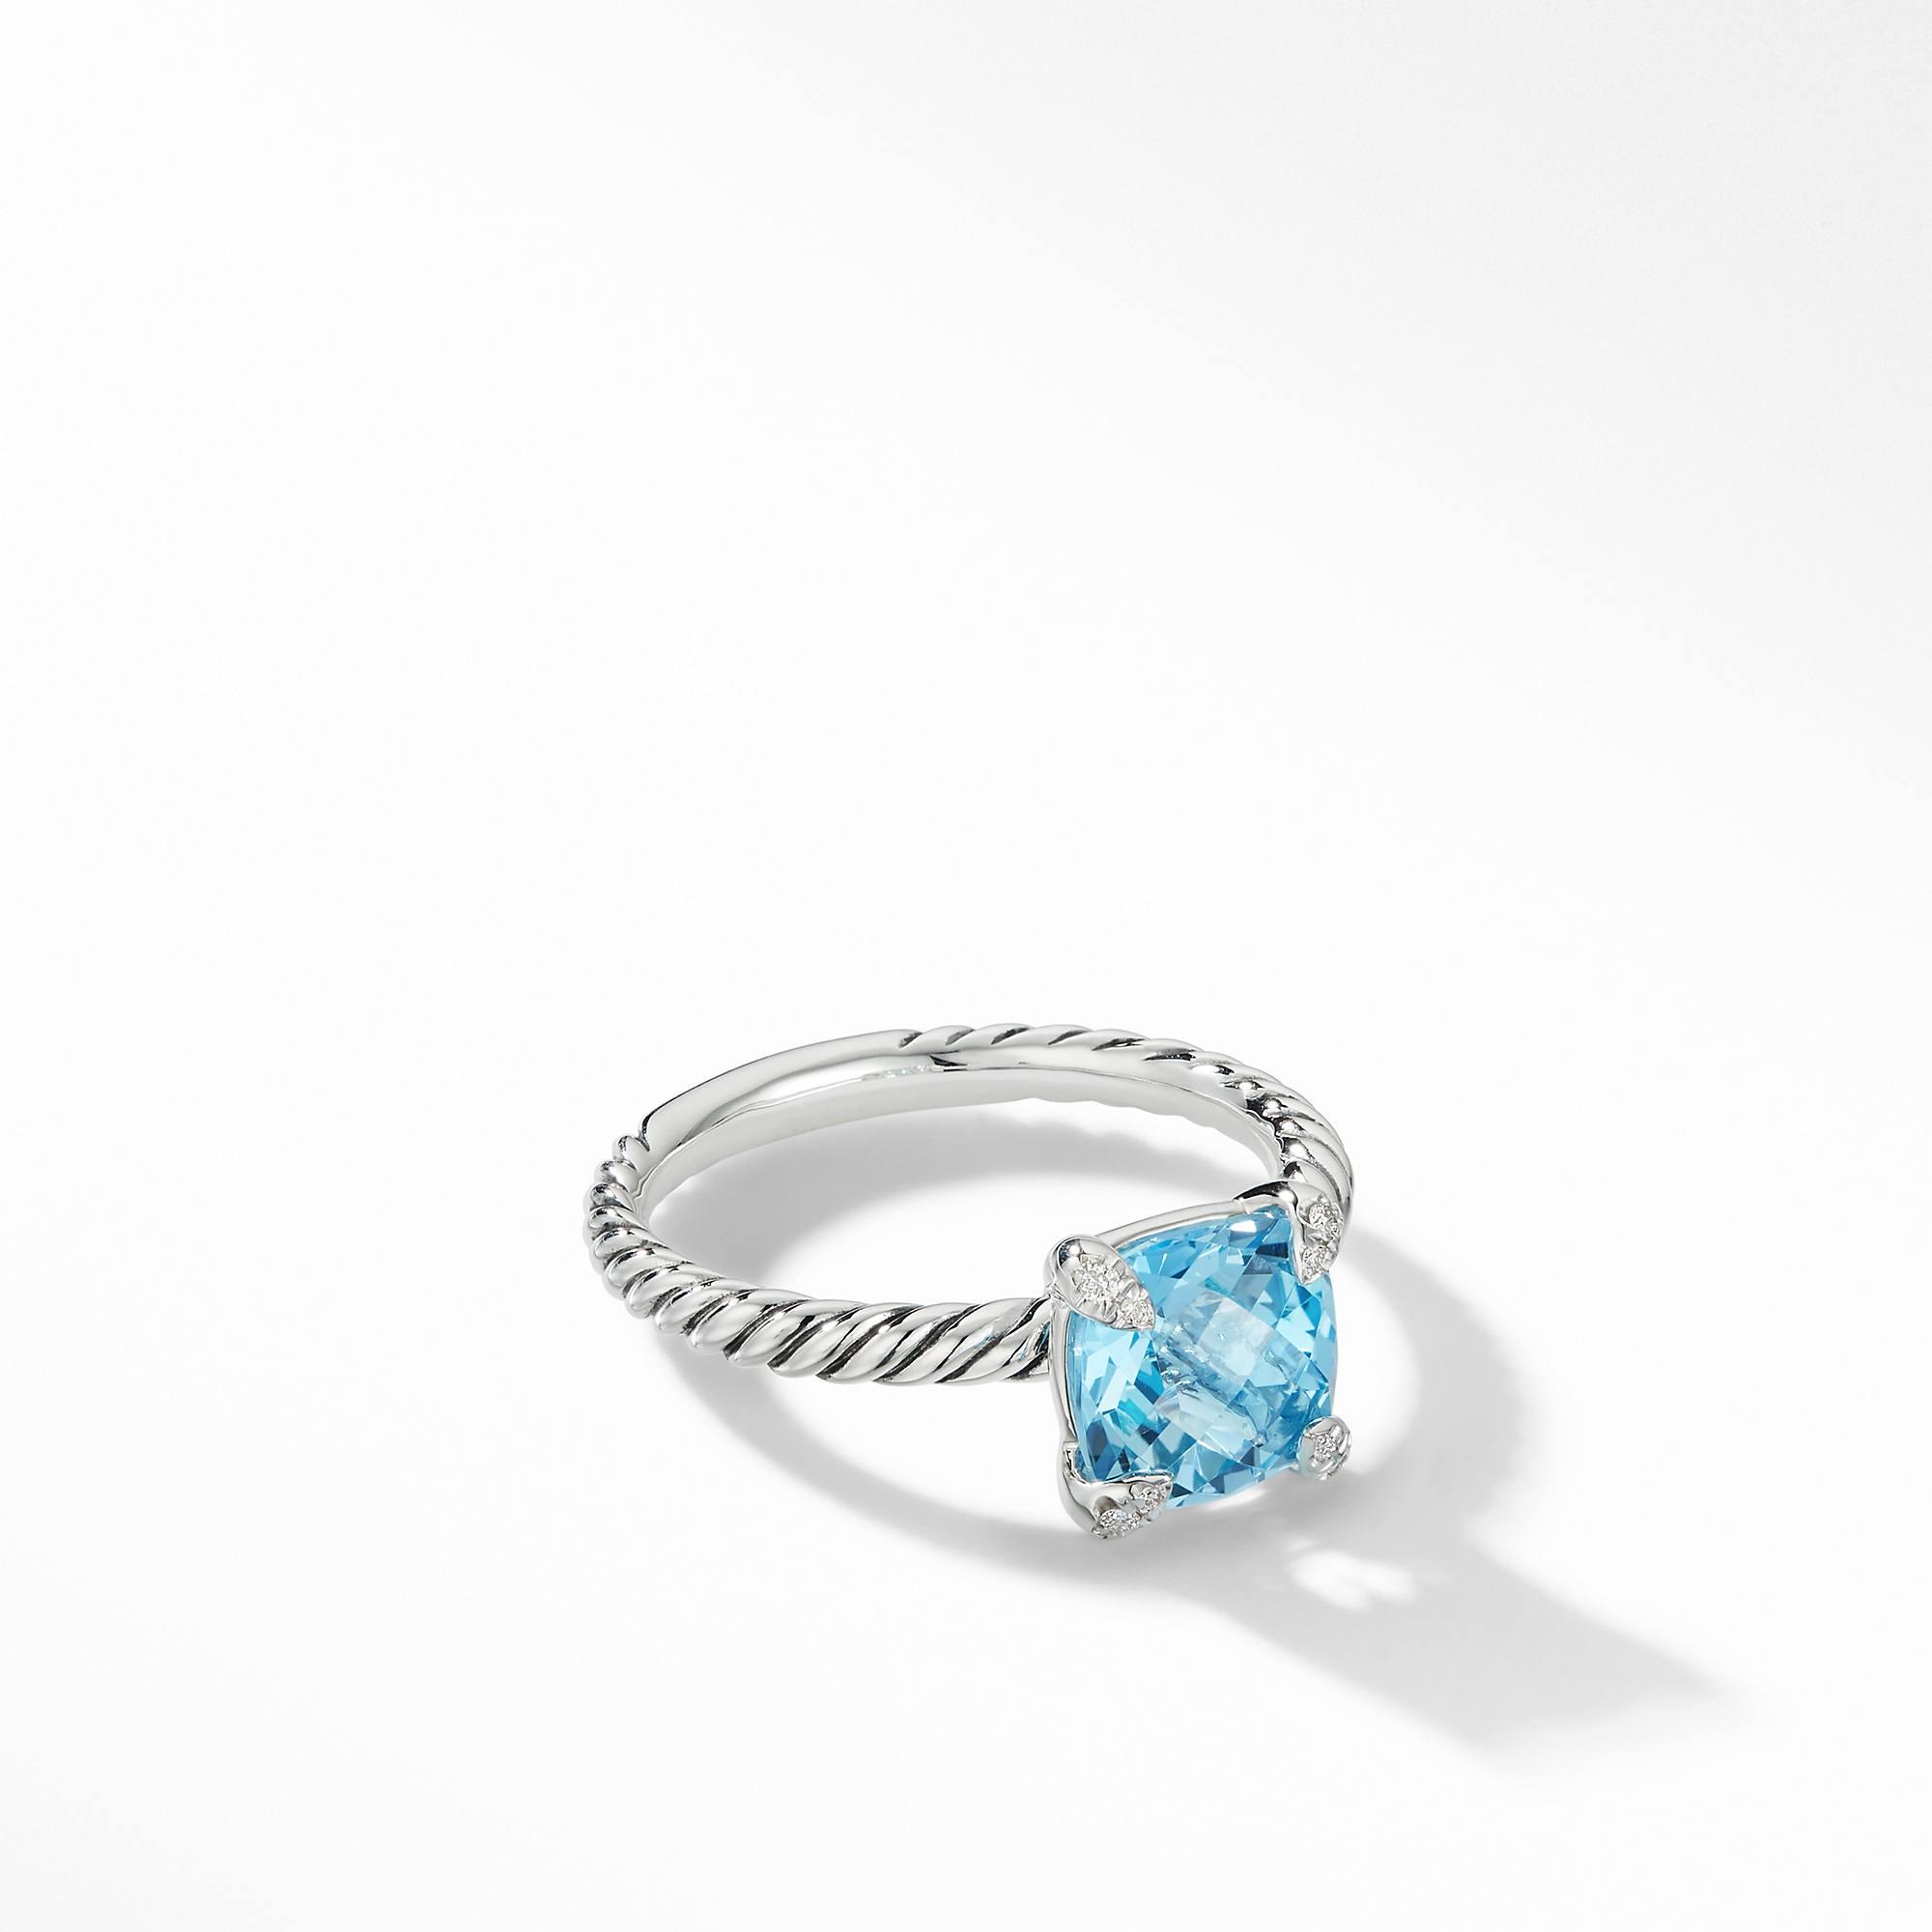 David Yurman Chatelaine Ring with Blue Topaz and Diamonds, size 6.5